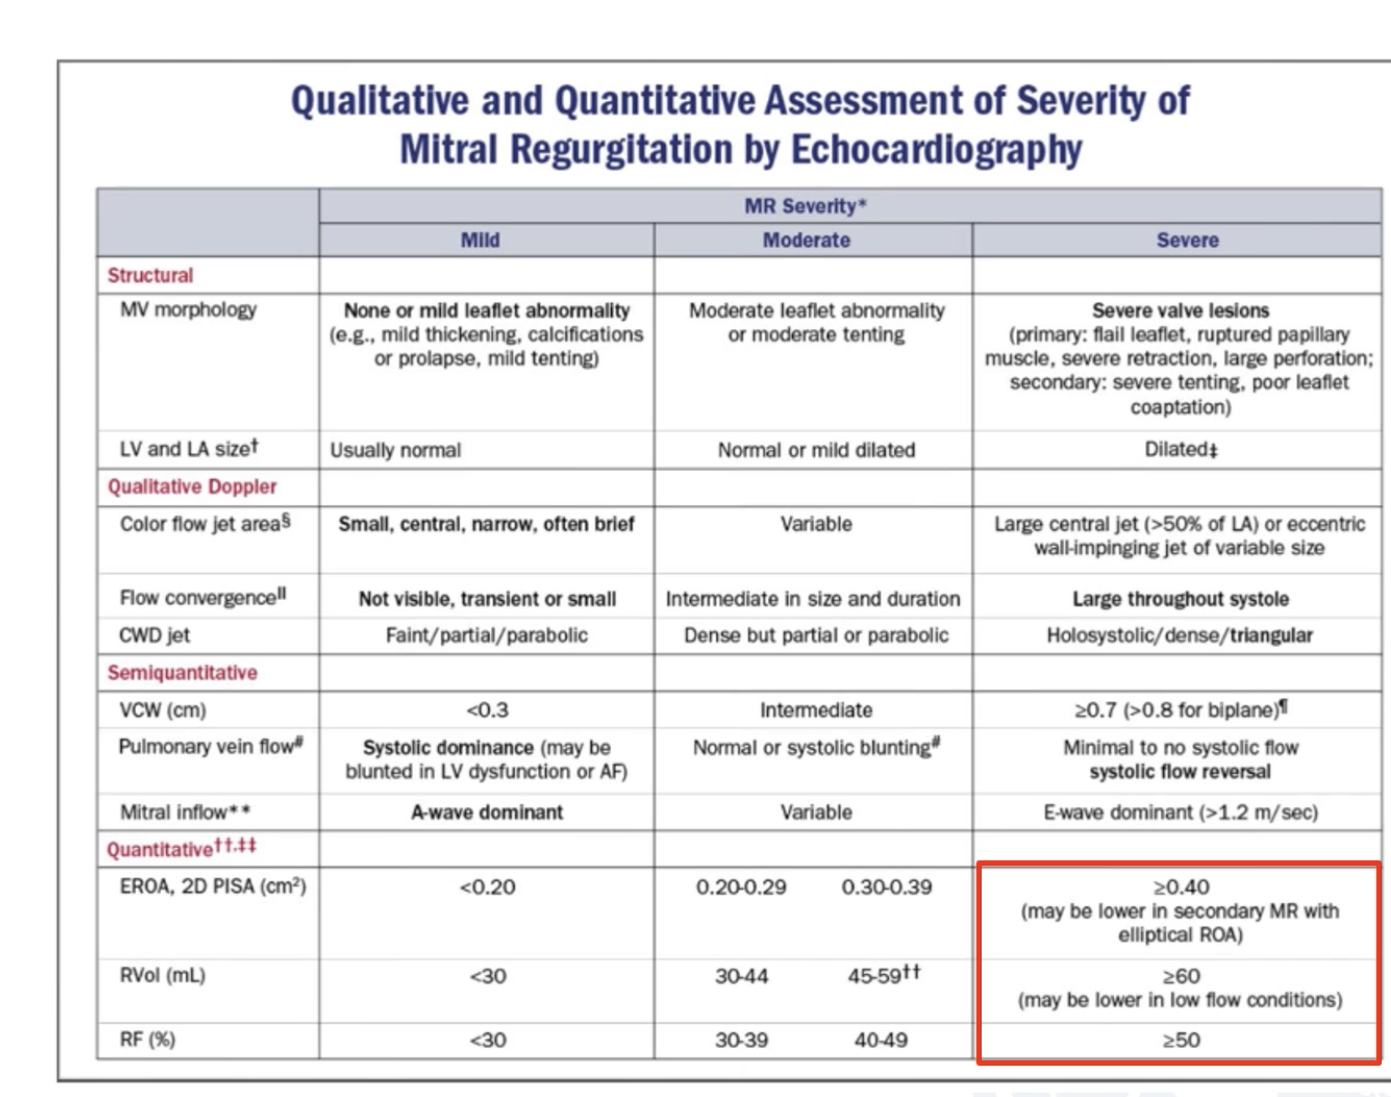 Qualitative and quantitative MR by echocardiography (TTE)